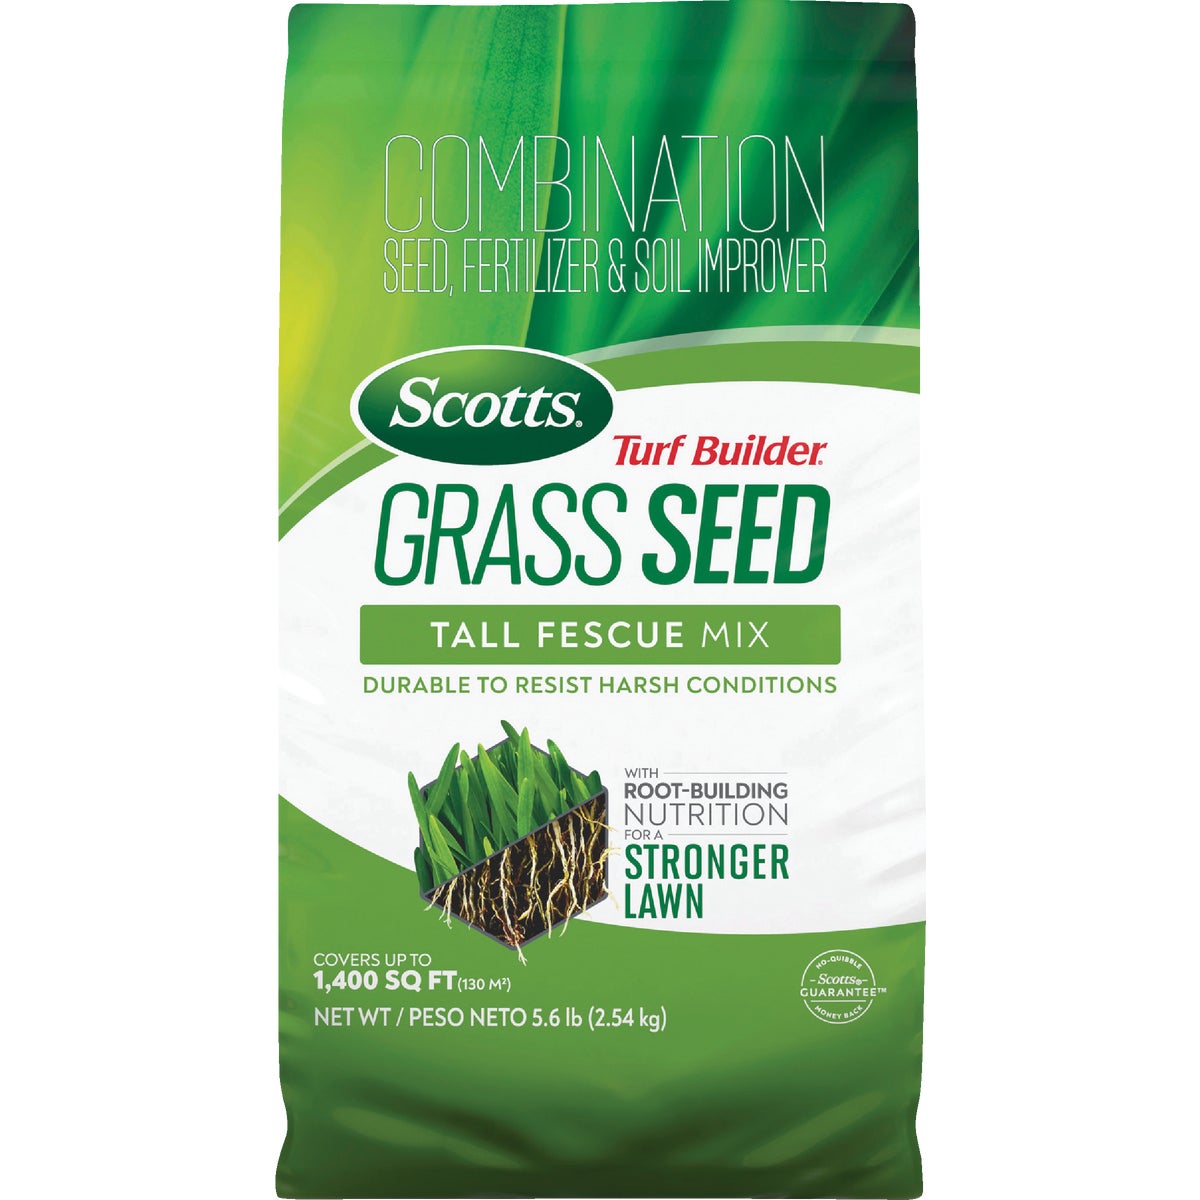 Scotts Turf Builder 5.6 Lb. 465 Sq. Ft. Tall Fescue Mix Grass Seed